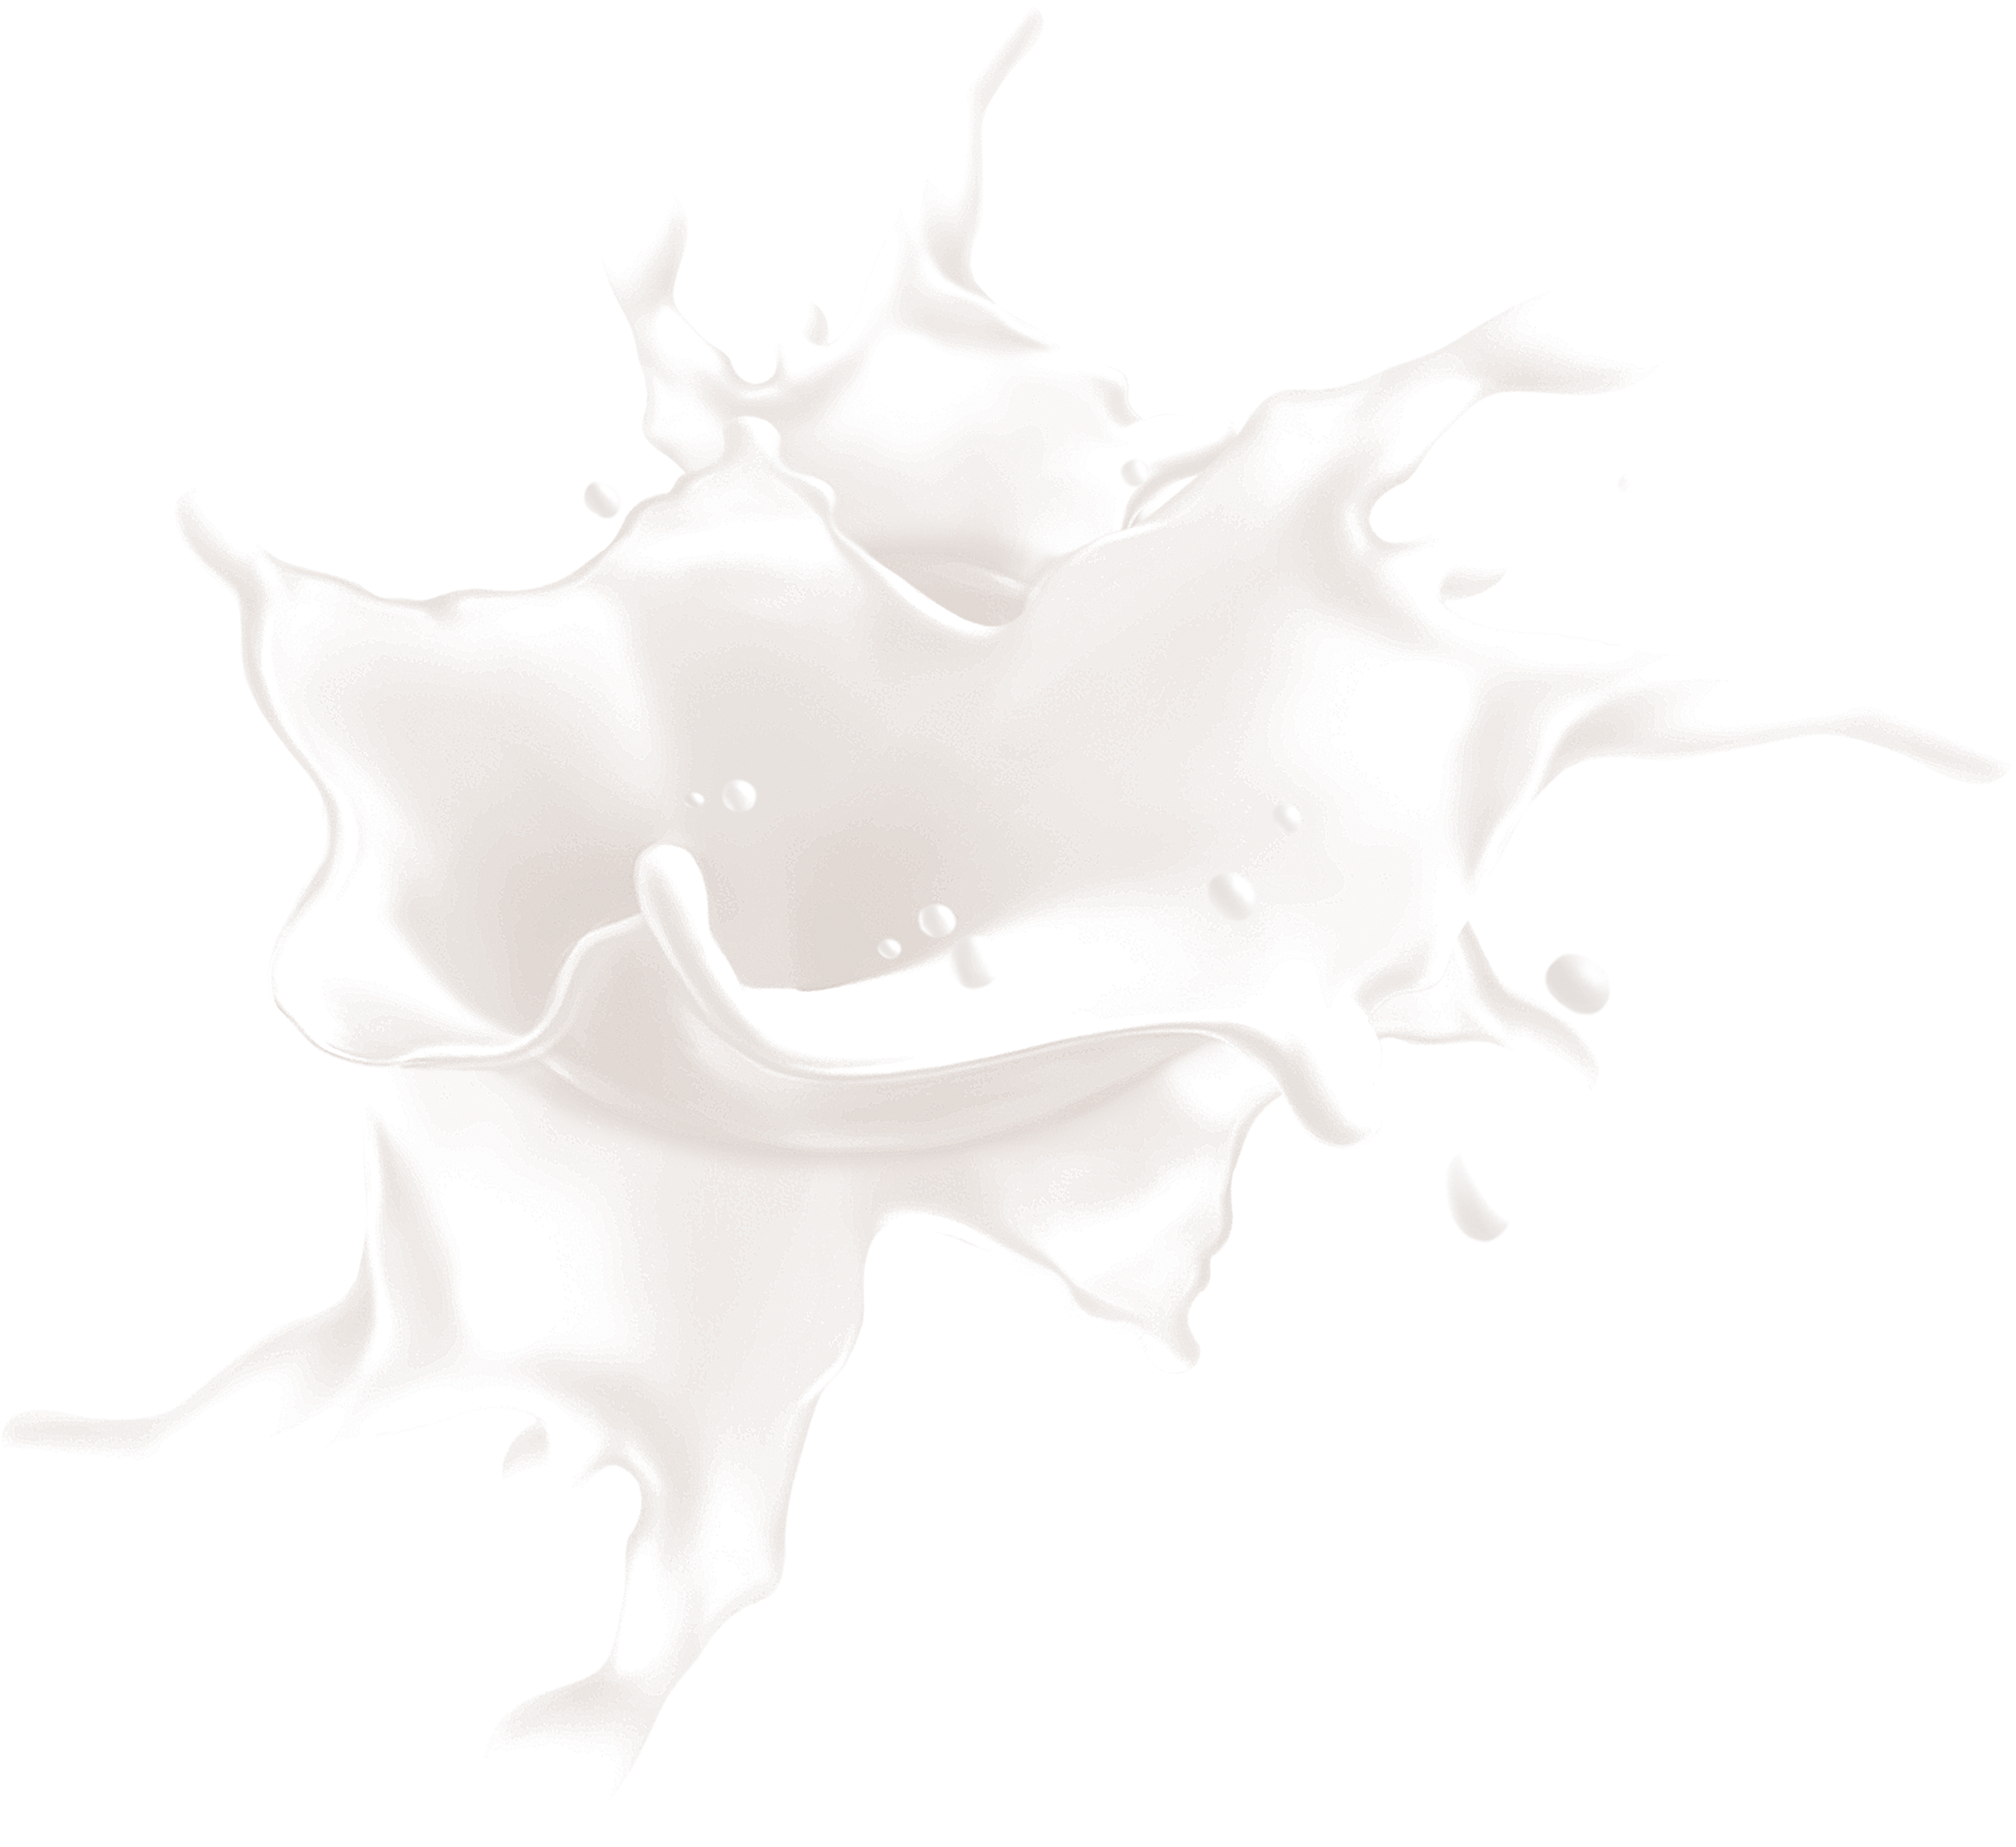 Milk Splash PNG